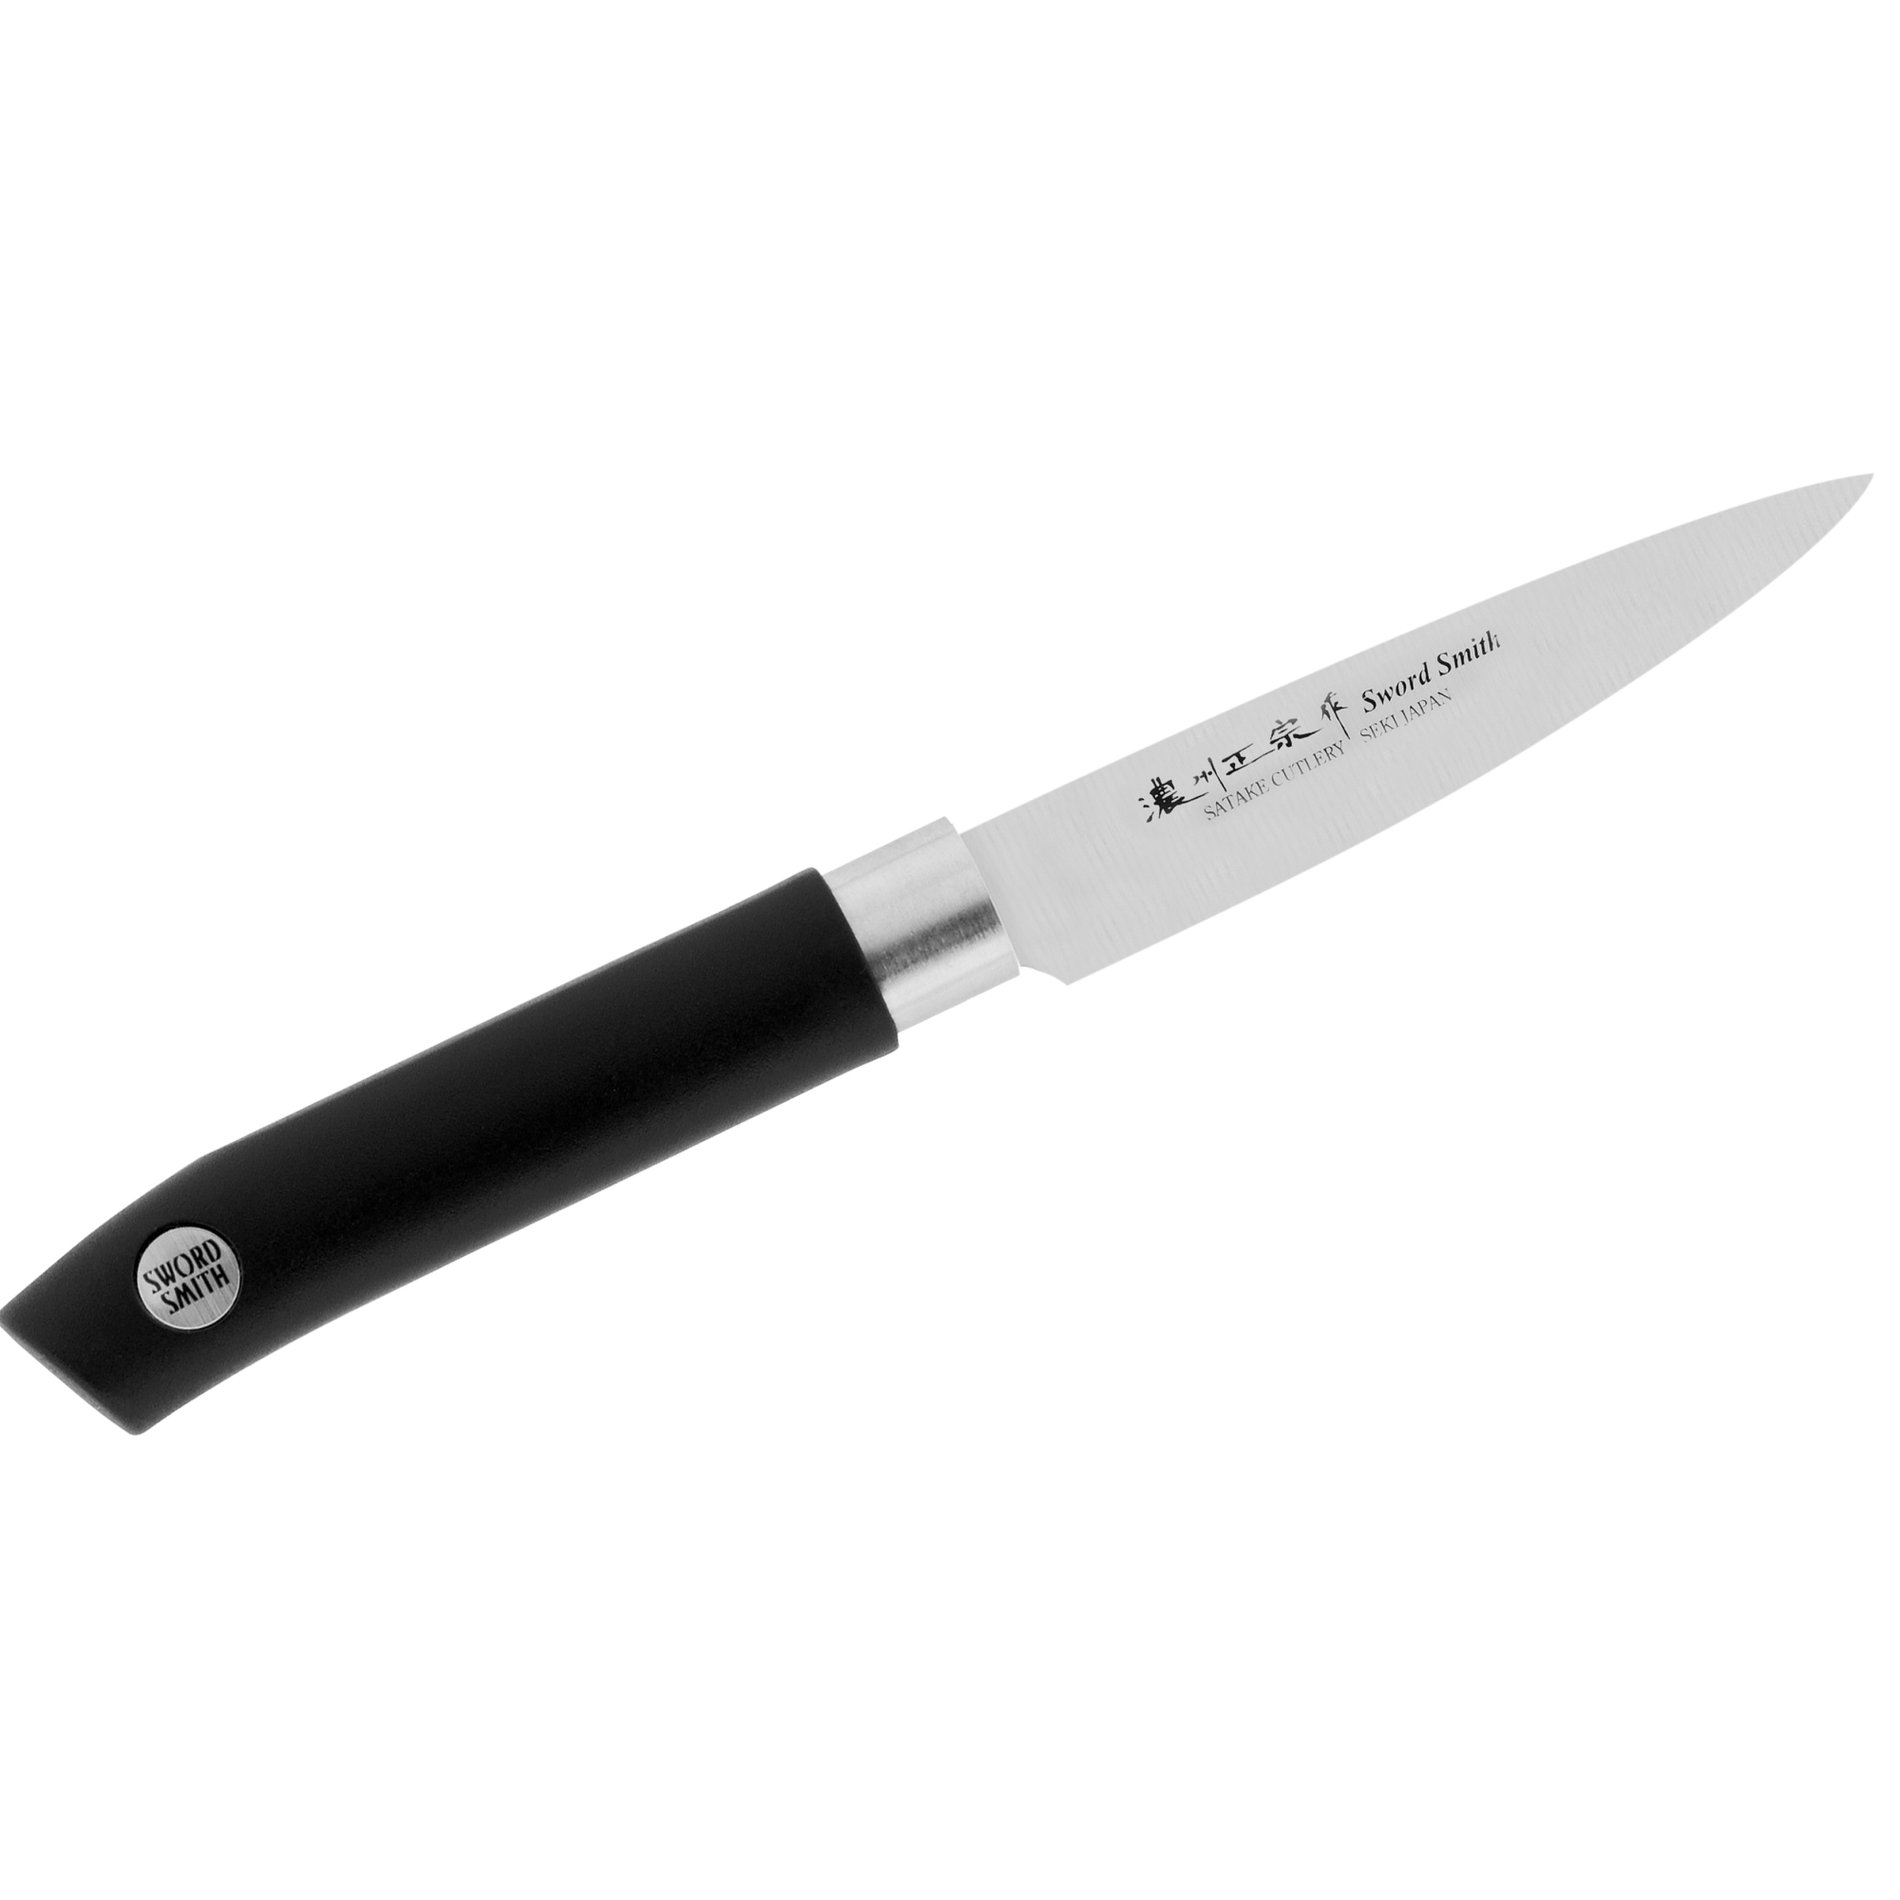 SATAKE Sword Smith 9 cm černý - ocelový nůž na zeleninu a ovoce